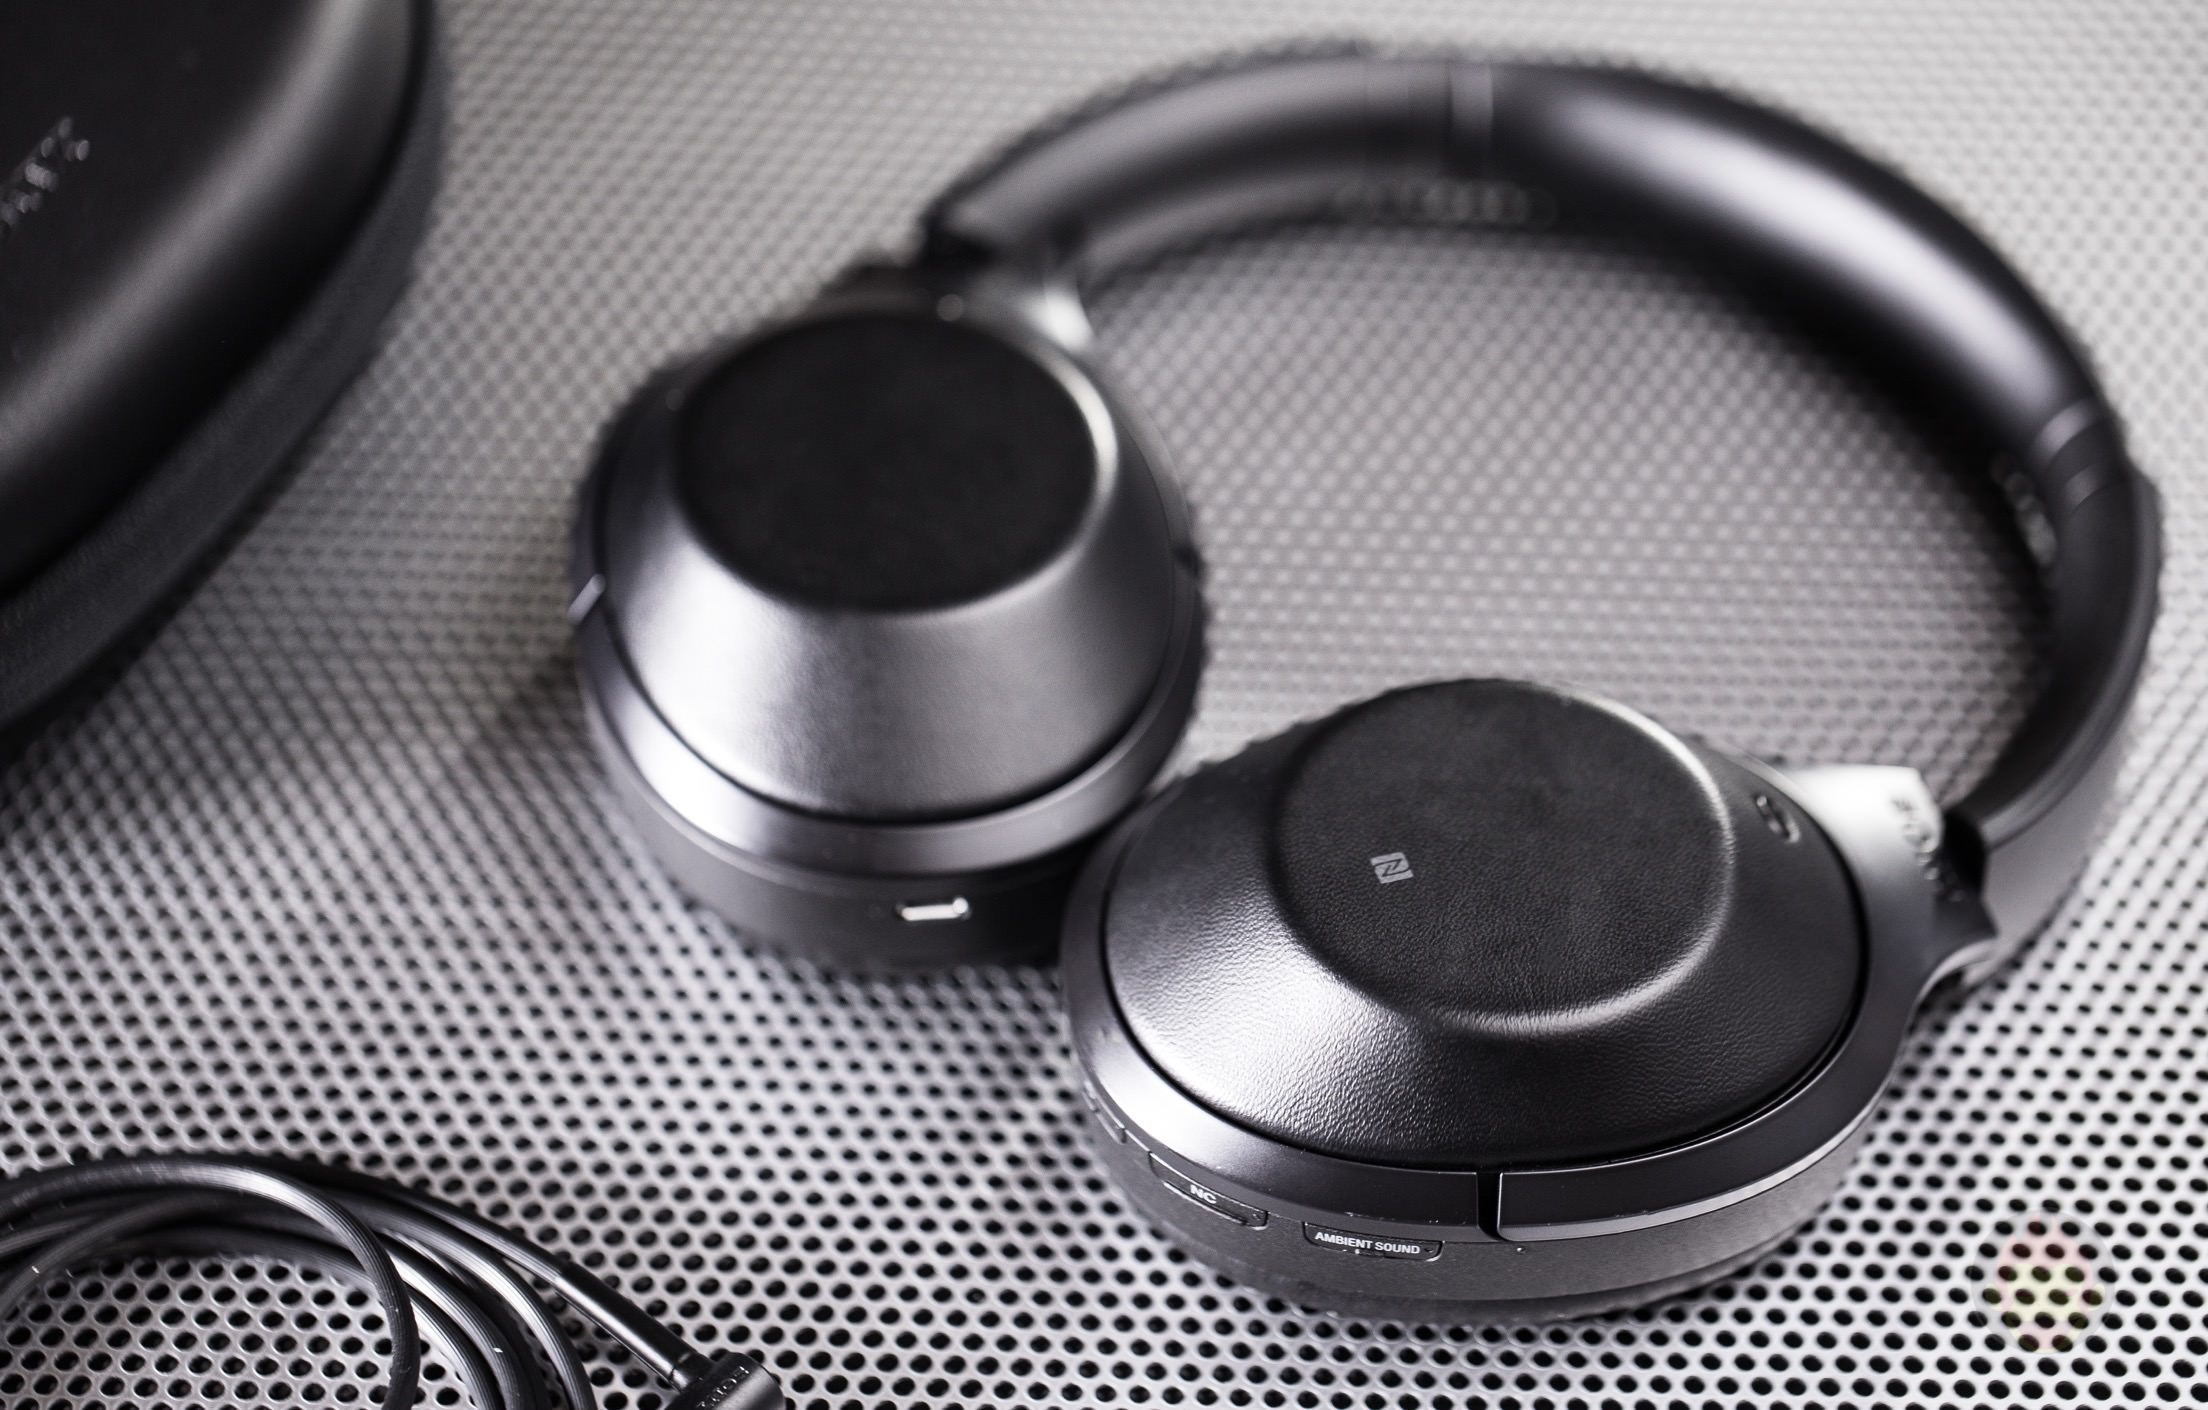 SONY-Wireless-Headphones-MDR-X1000-Review-01.jpg